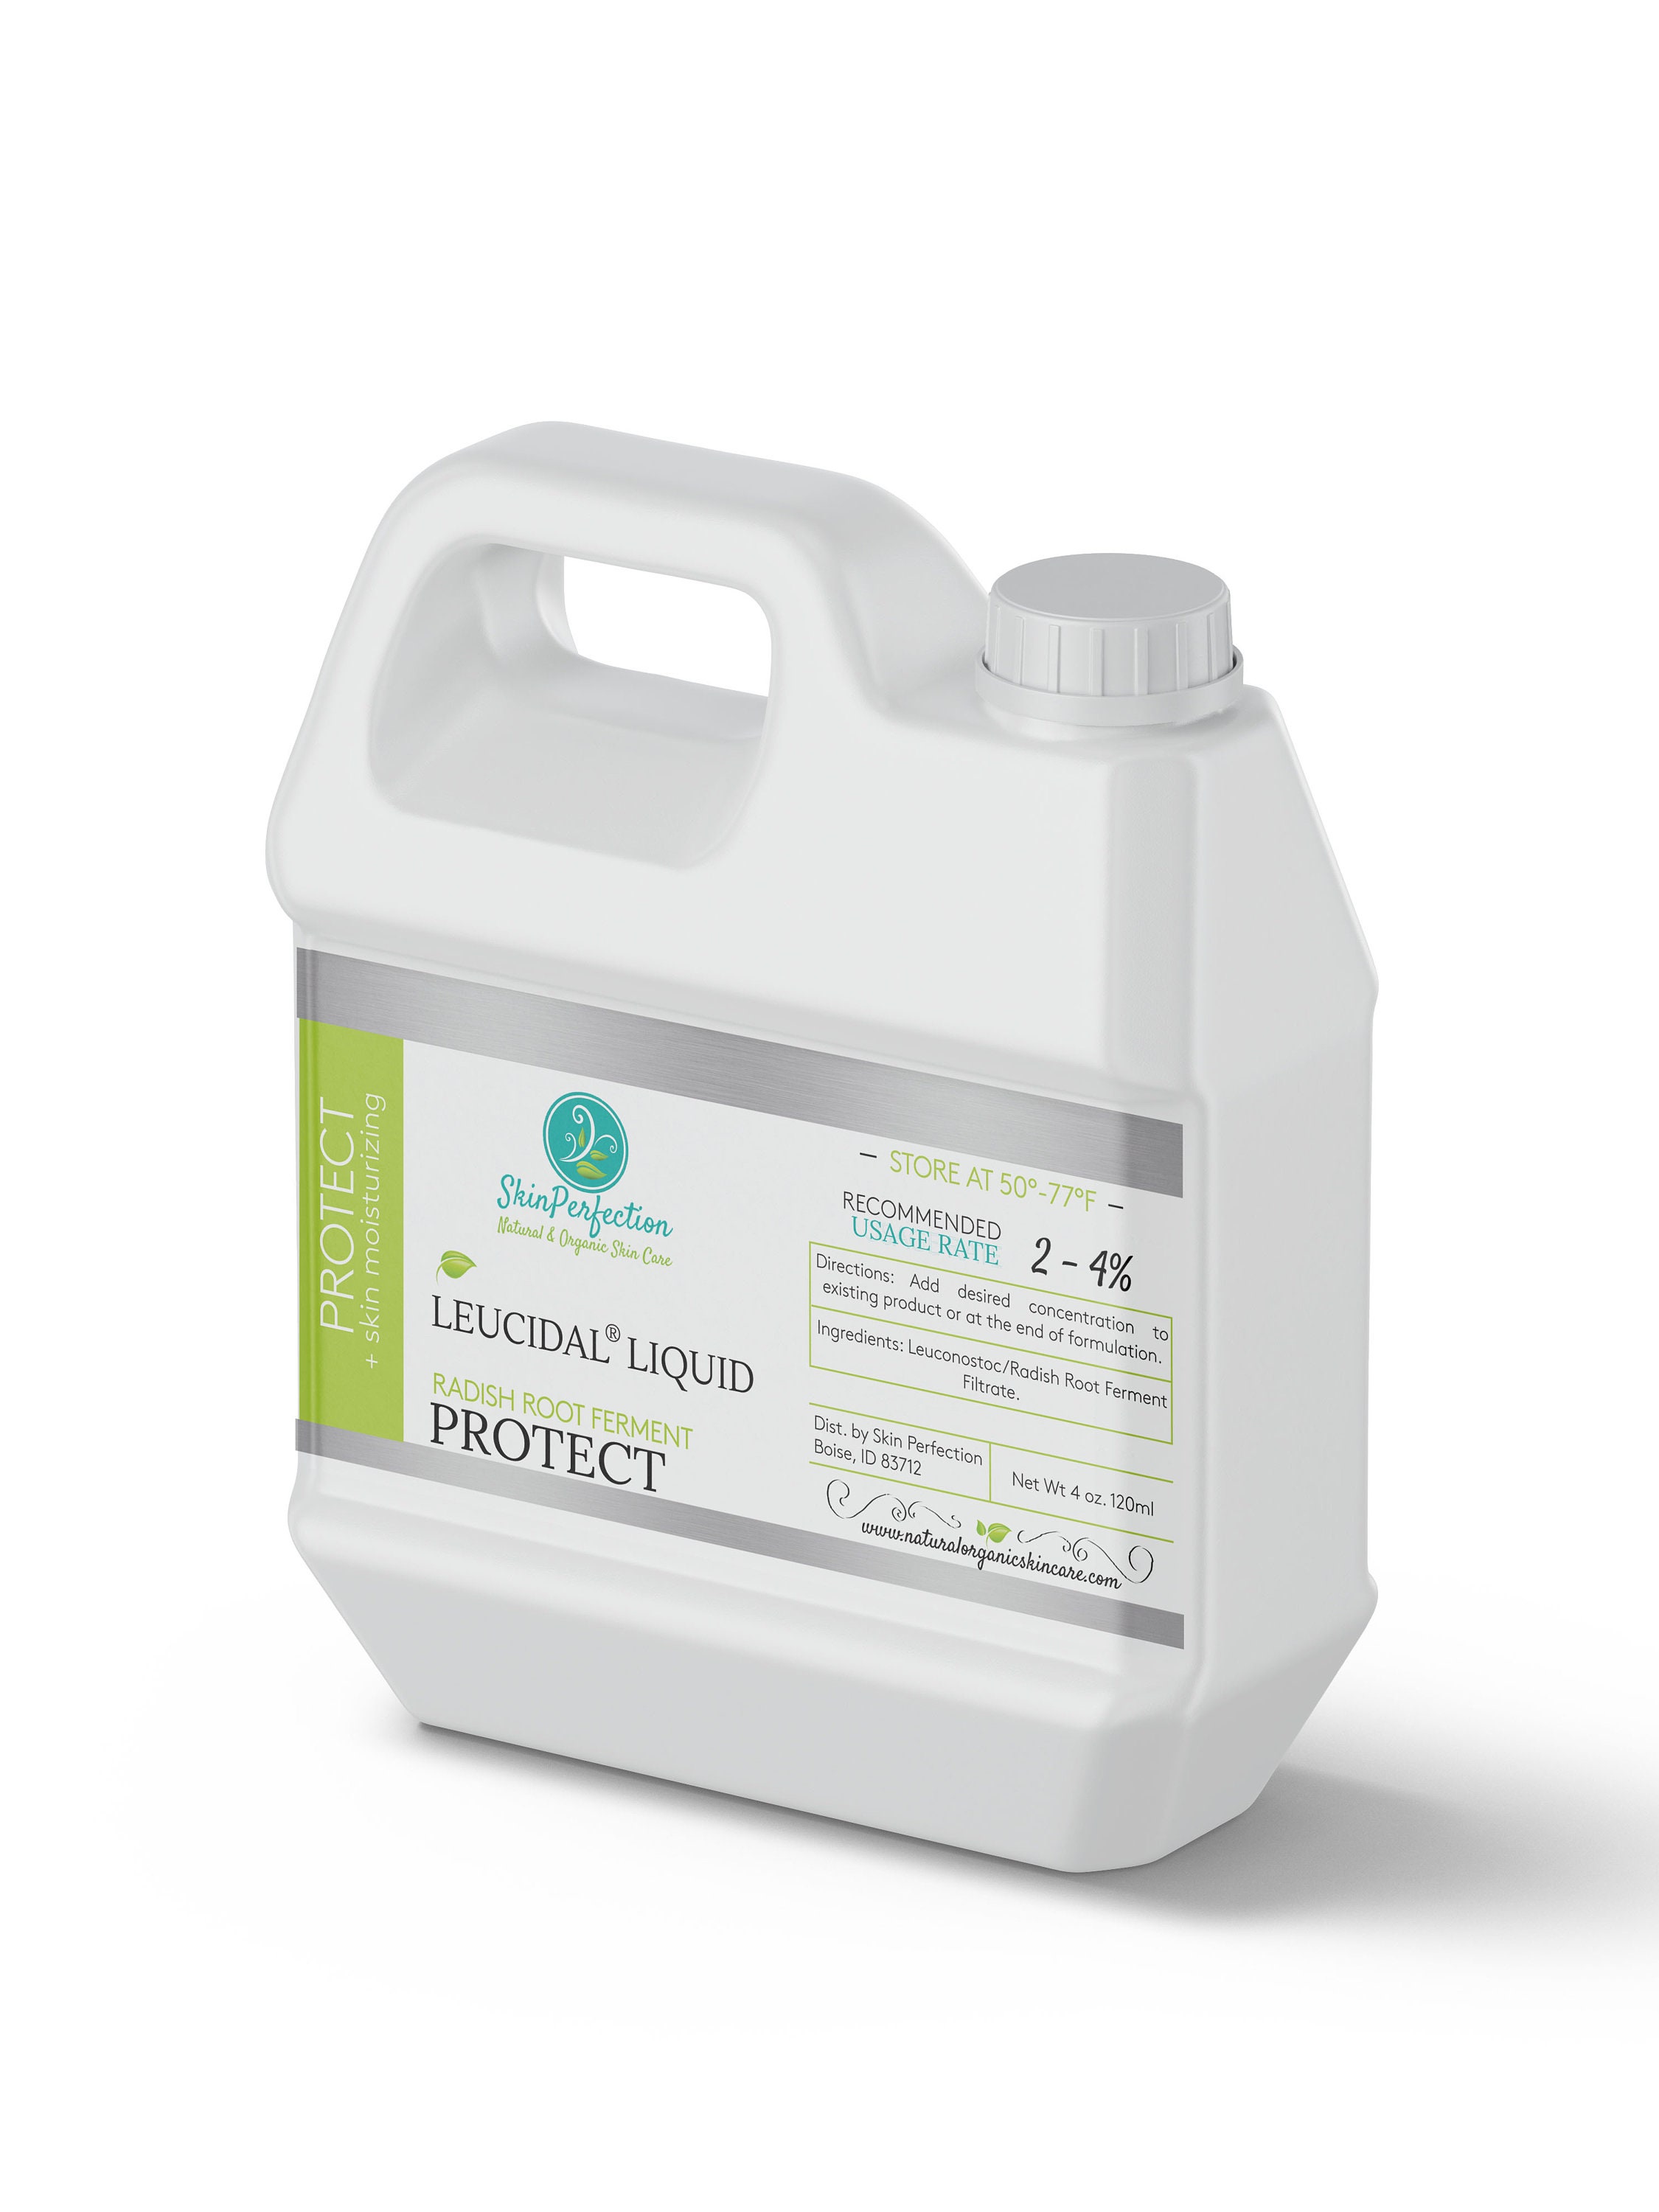 Velona Sodium Lactate 60% - 2 oz | USP Grade Natural Preservative | For  Soap Making & Lotions | Harder Bar of Soap, pH Regulator, Glycerin  substitute